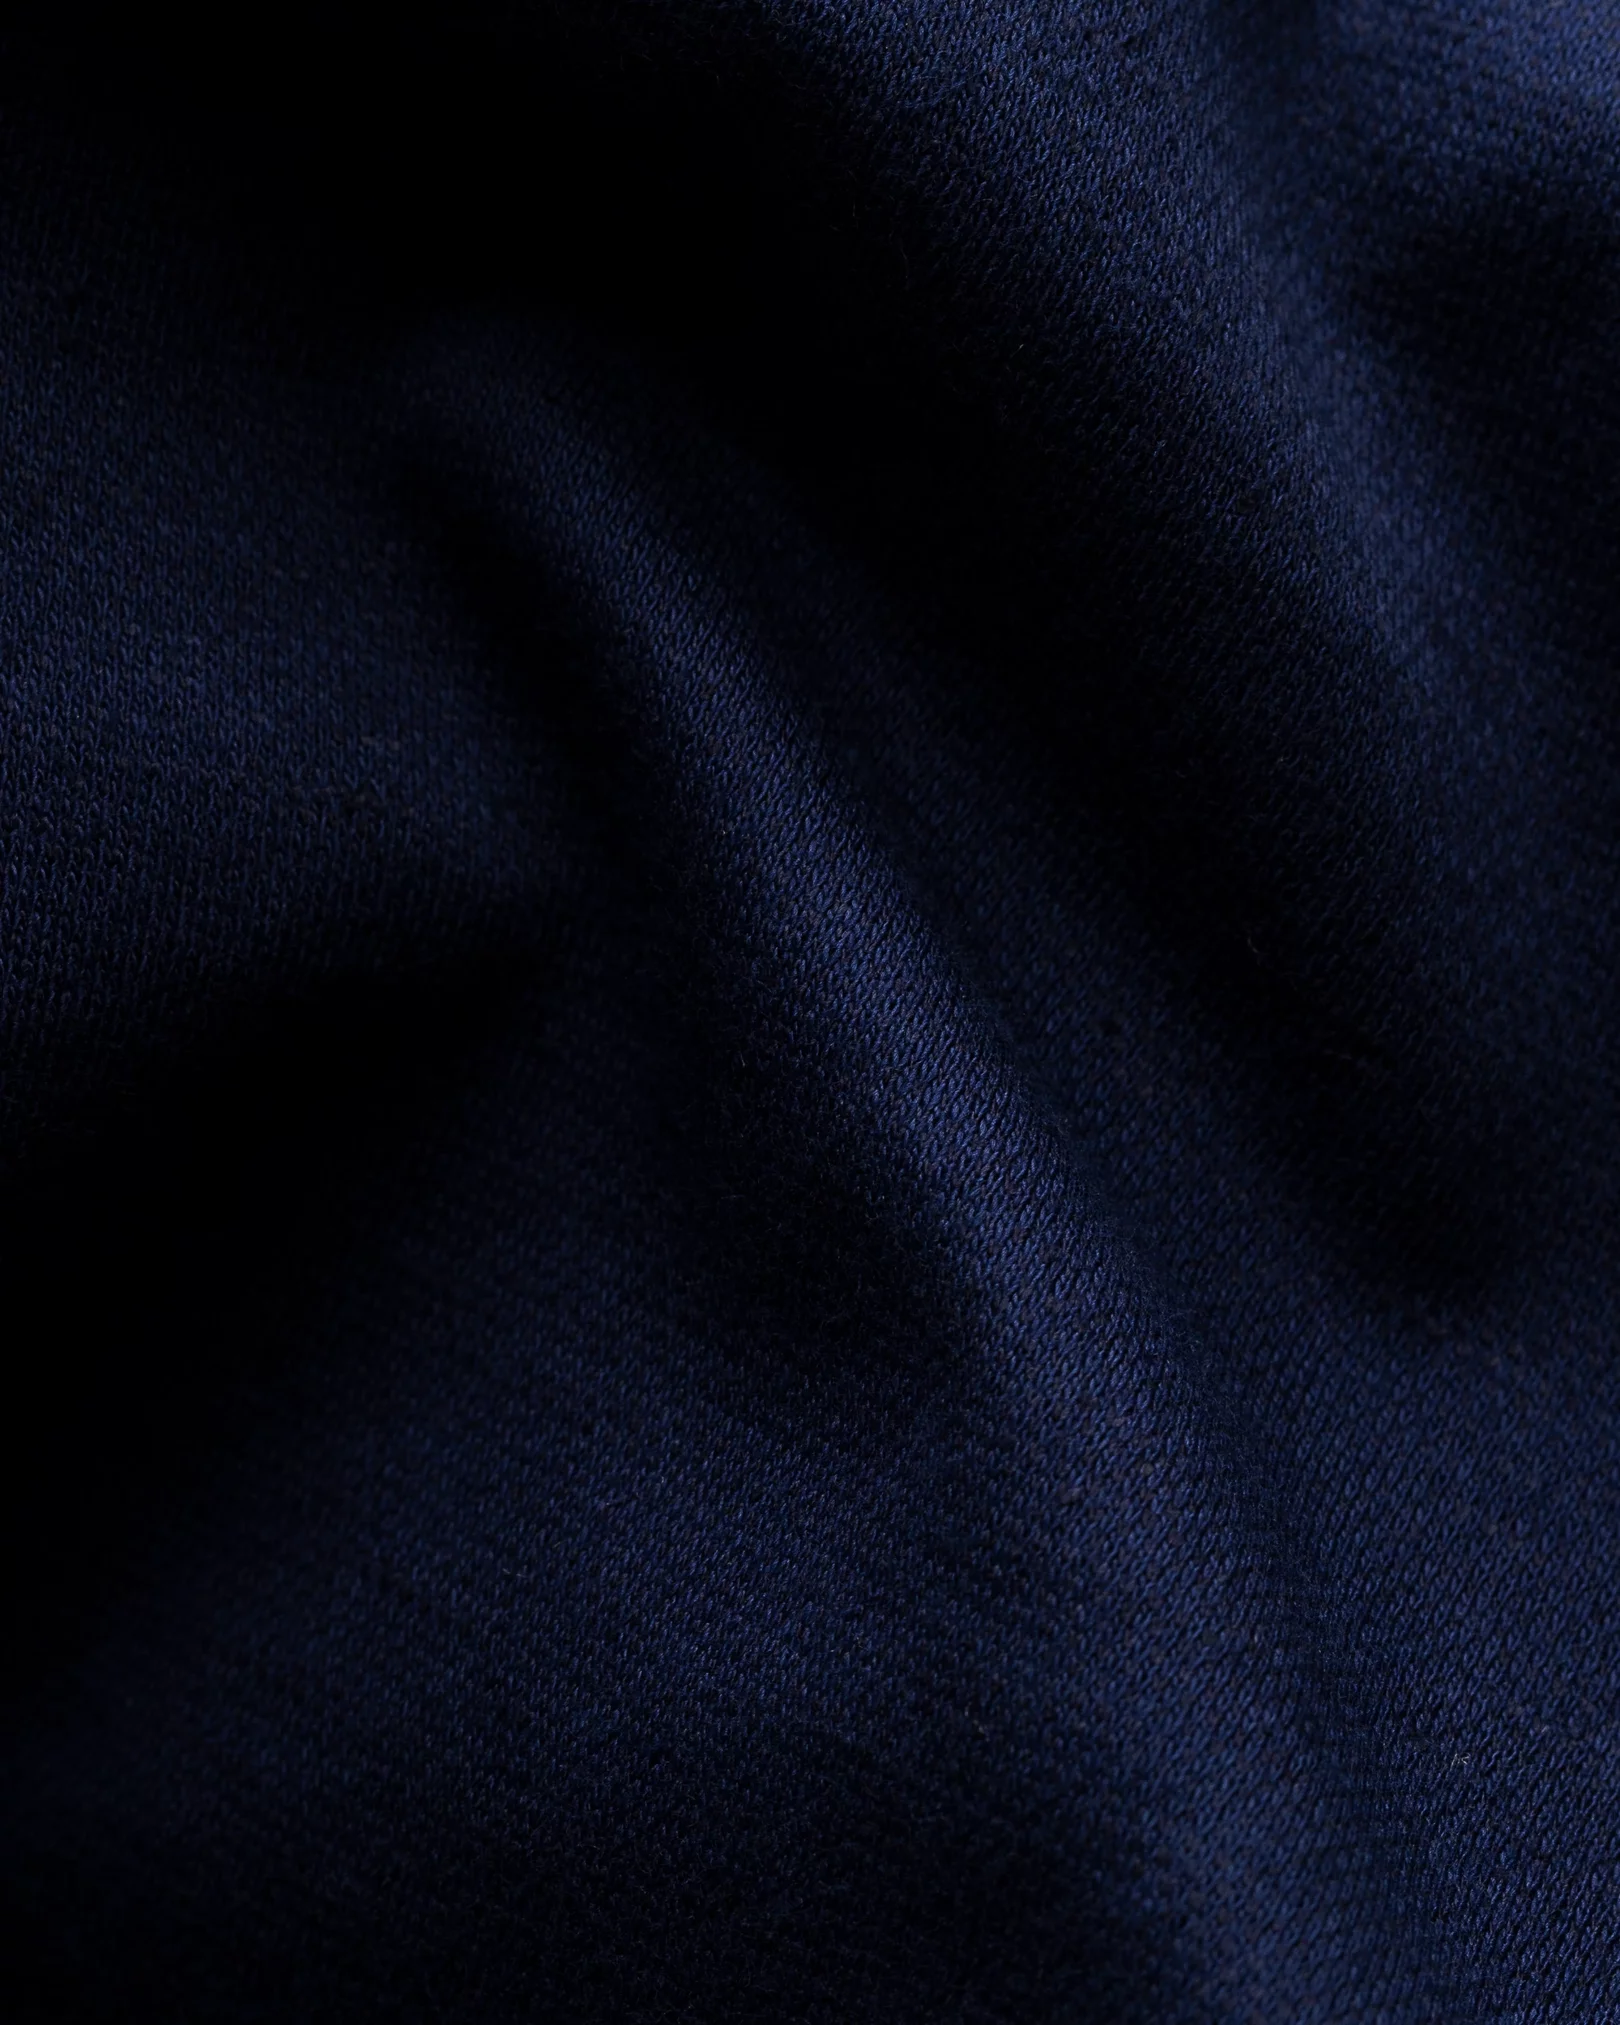 Eton - navy blue pique open cotton linen short sleeve